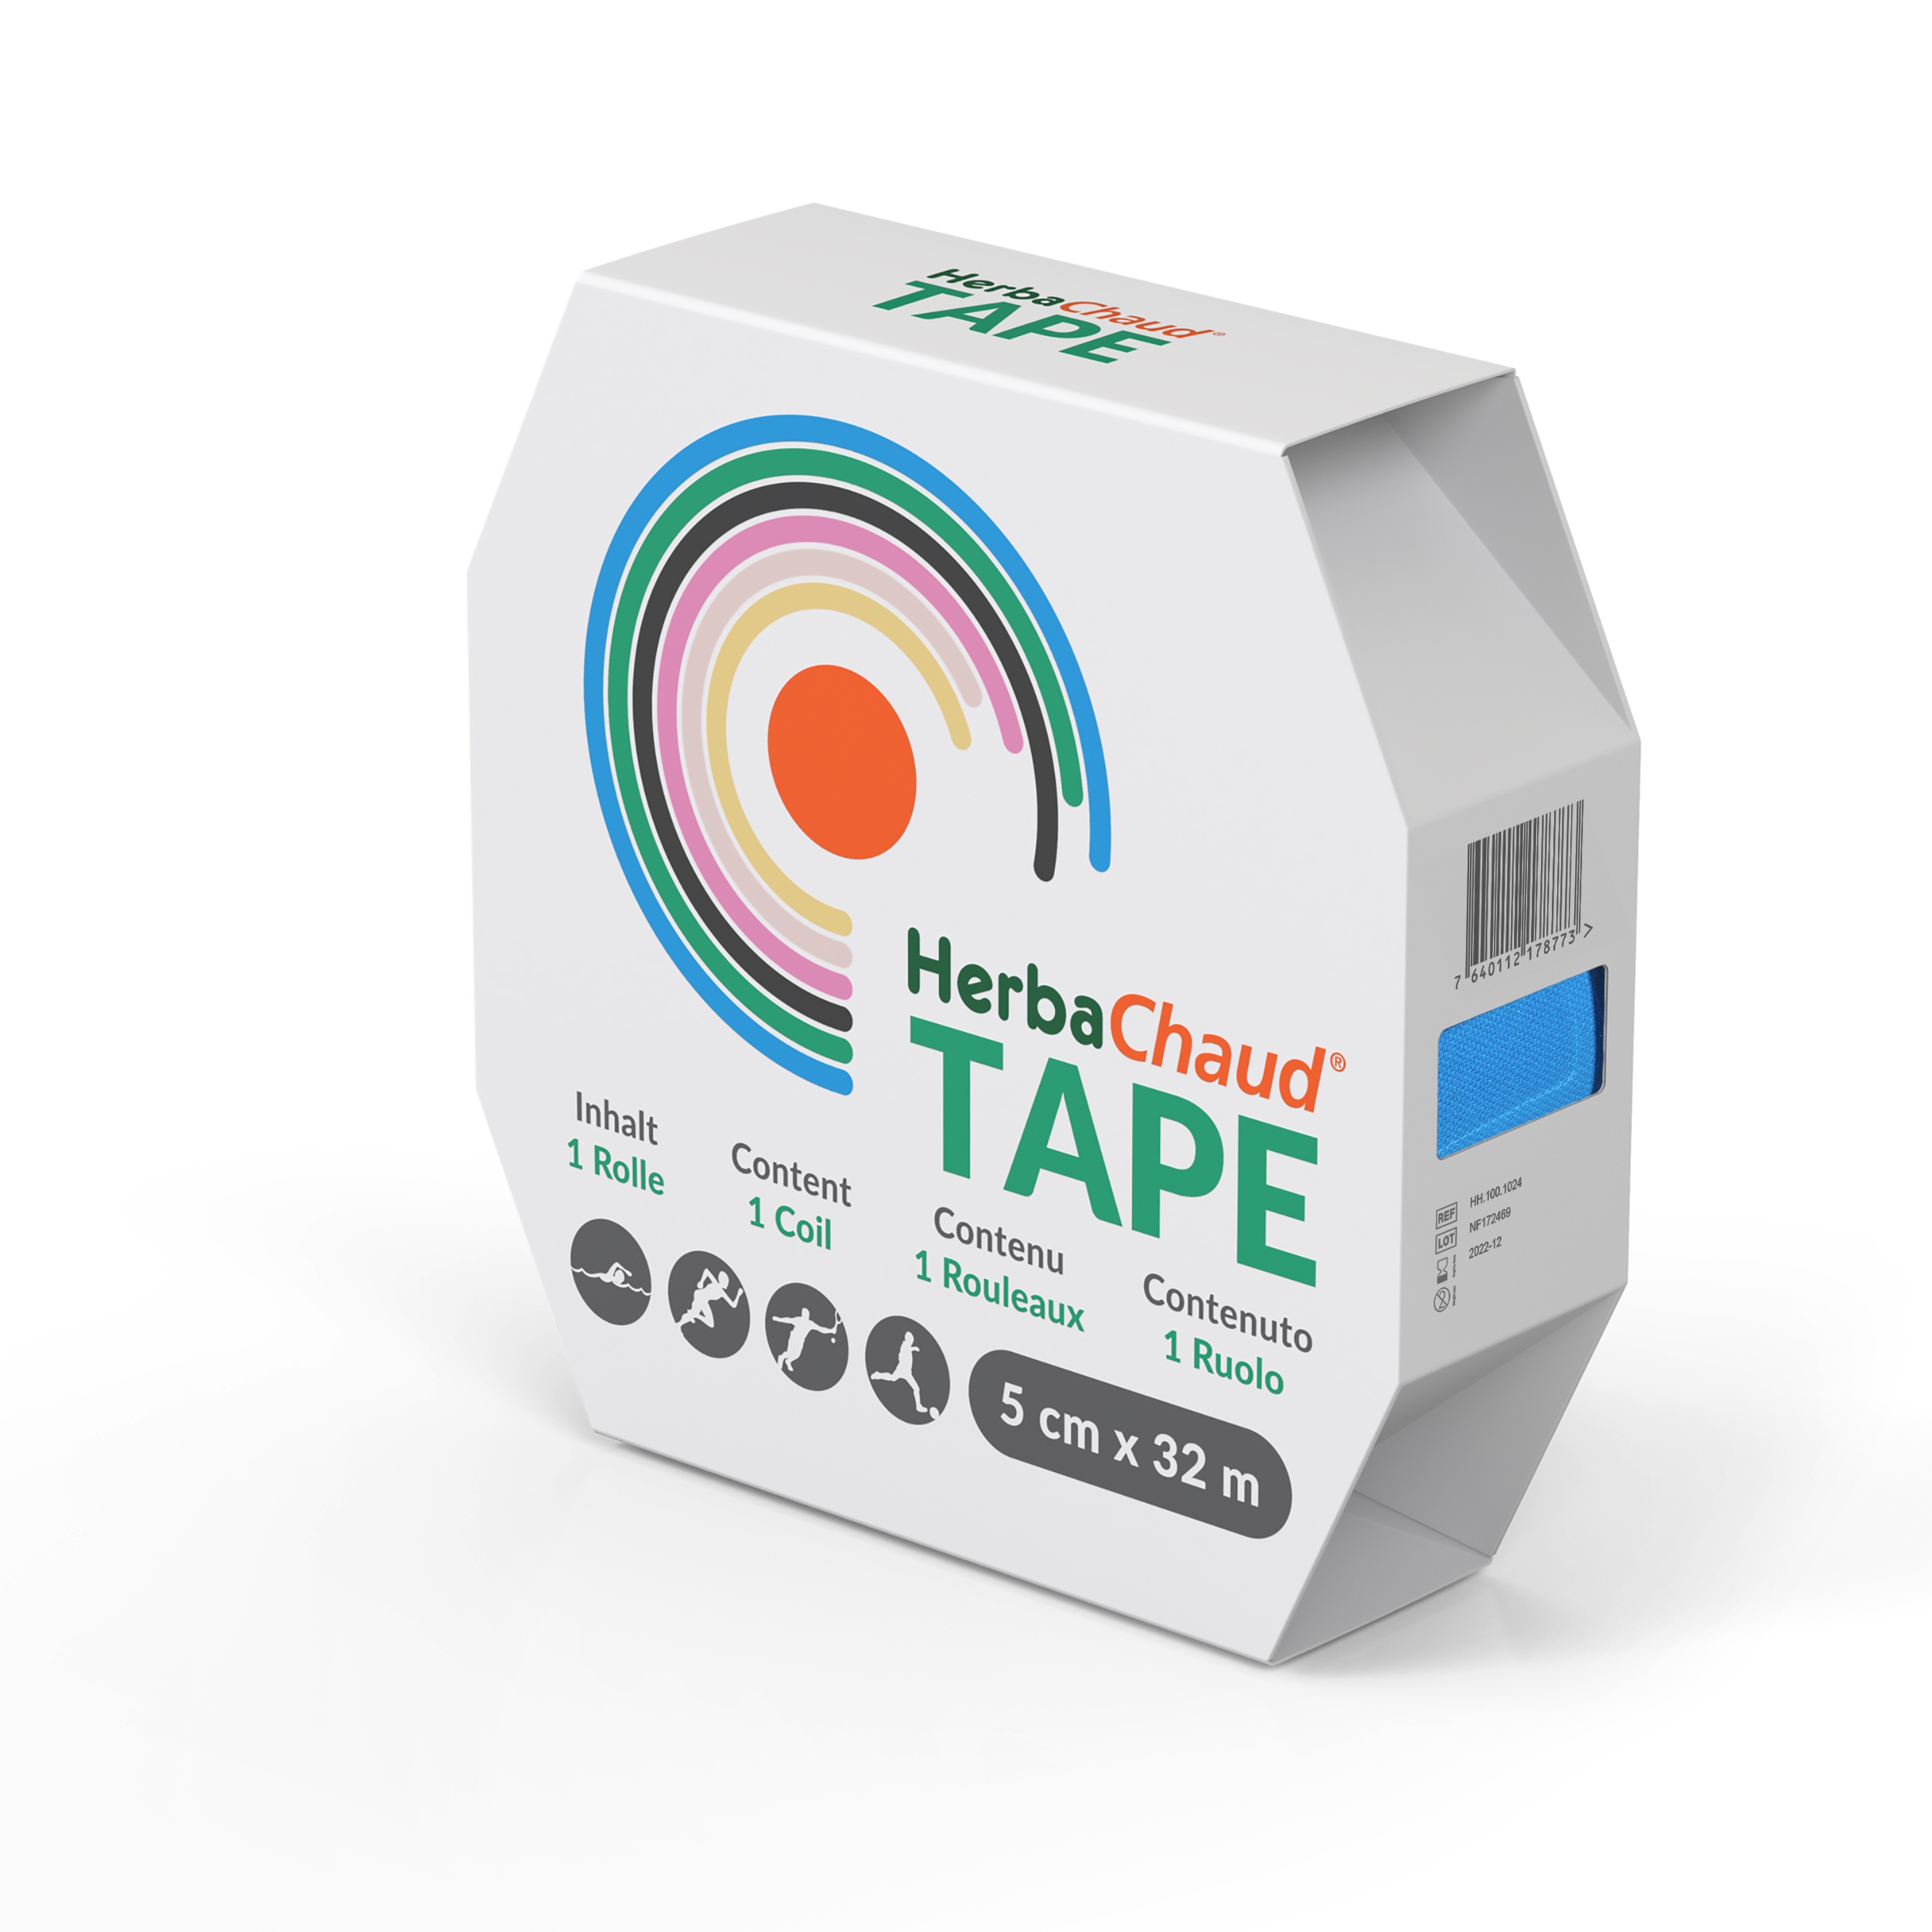 HerbaChaud Clinic Tape